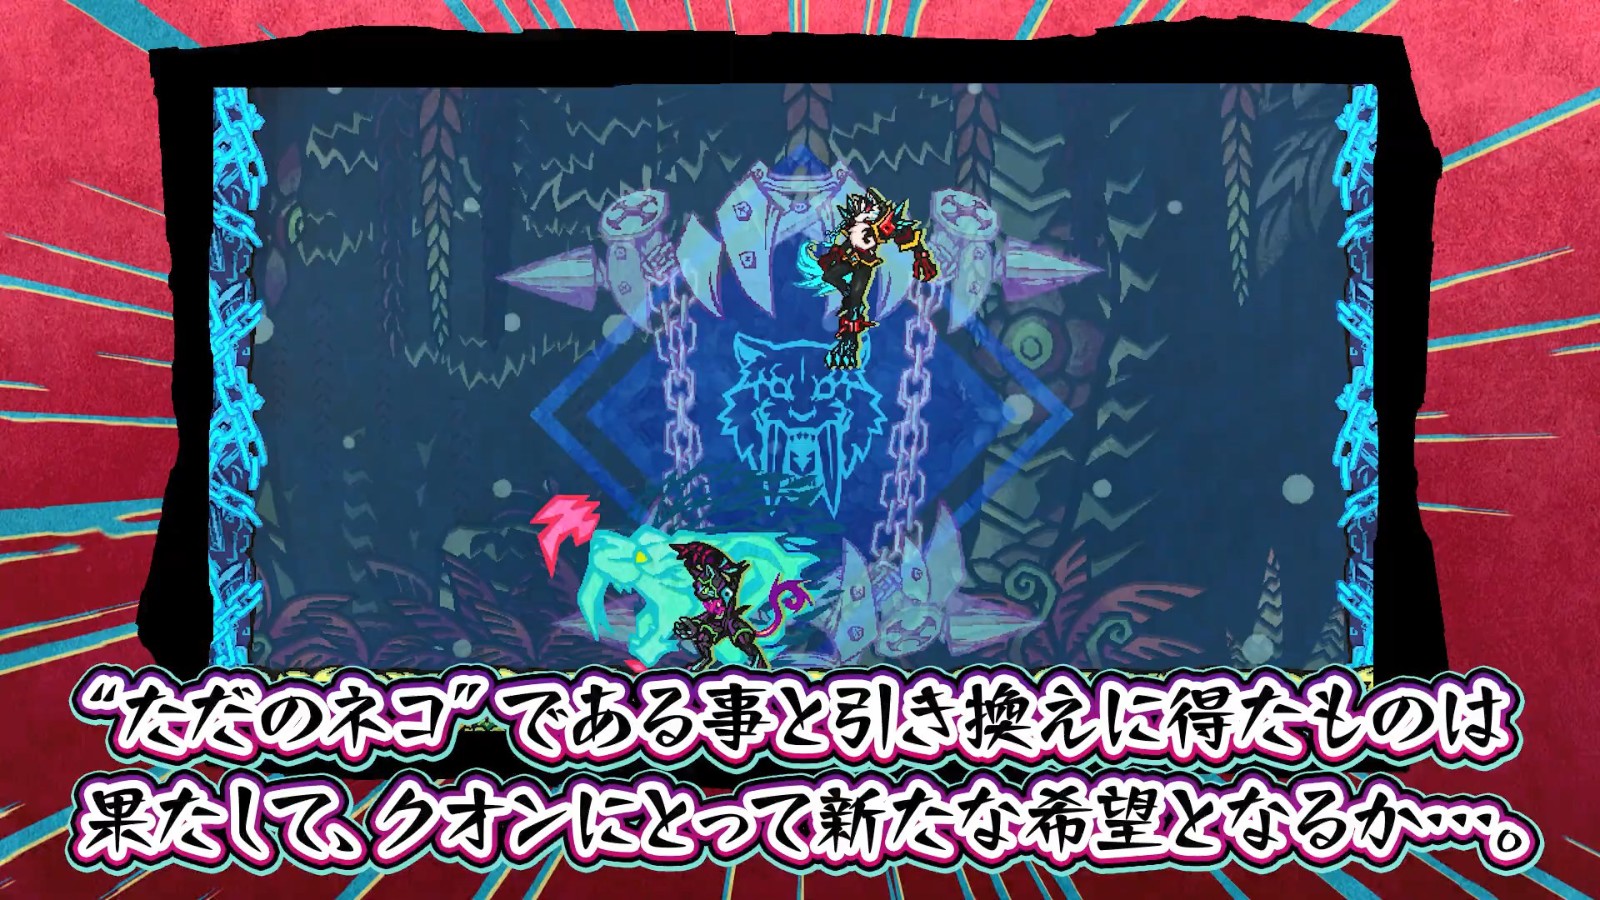 2D卷轴游戏《九魂的久远》发布主题曲预告 5月30日发售